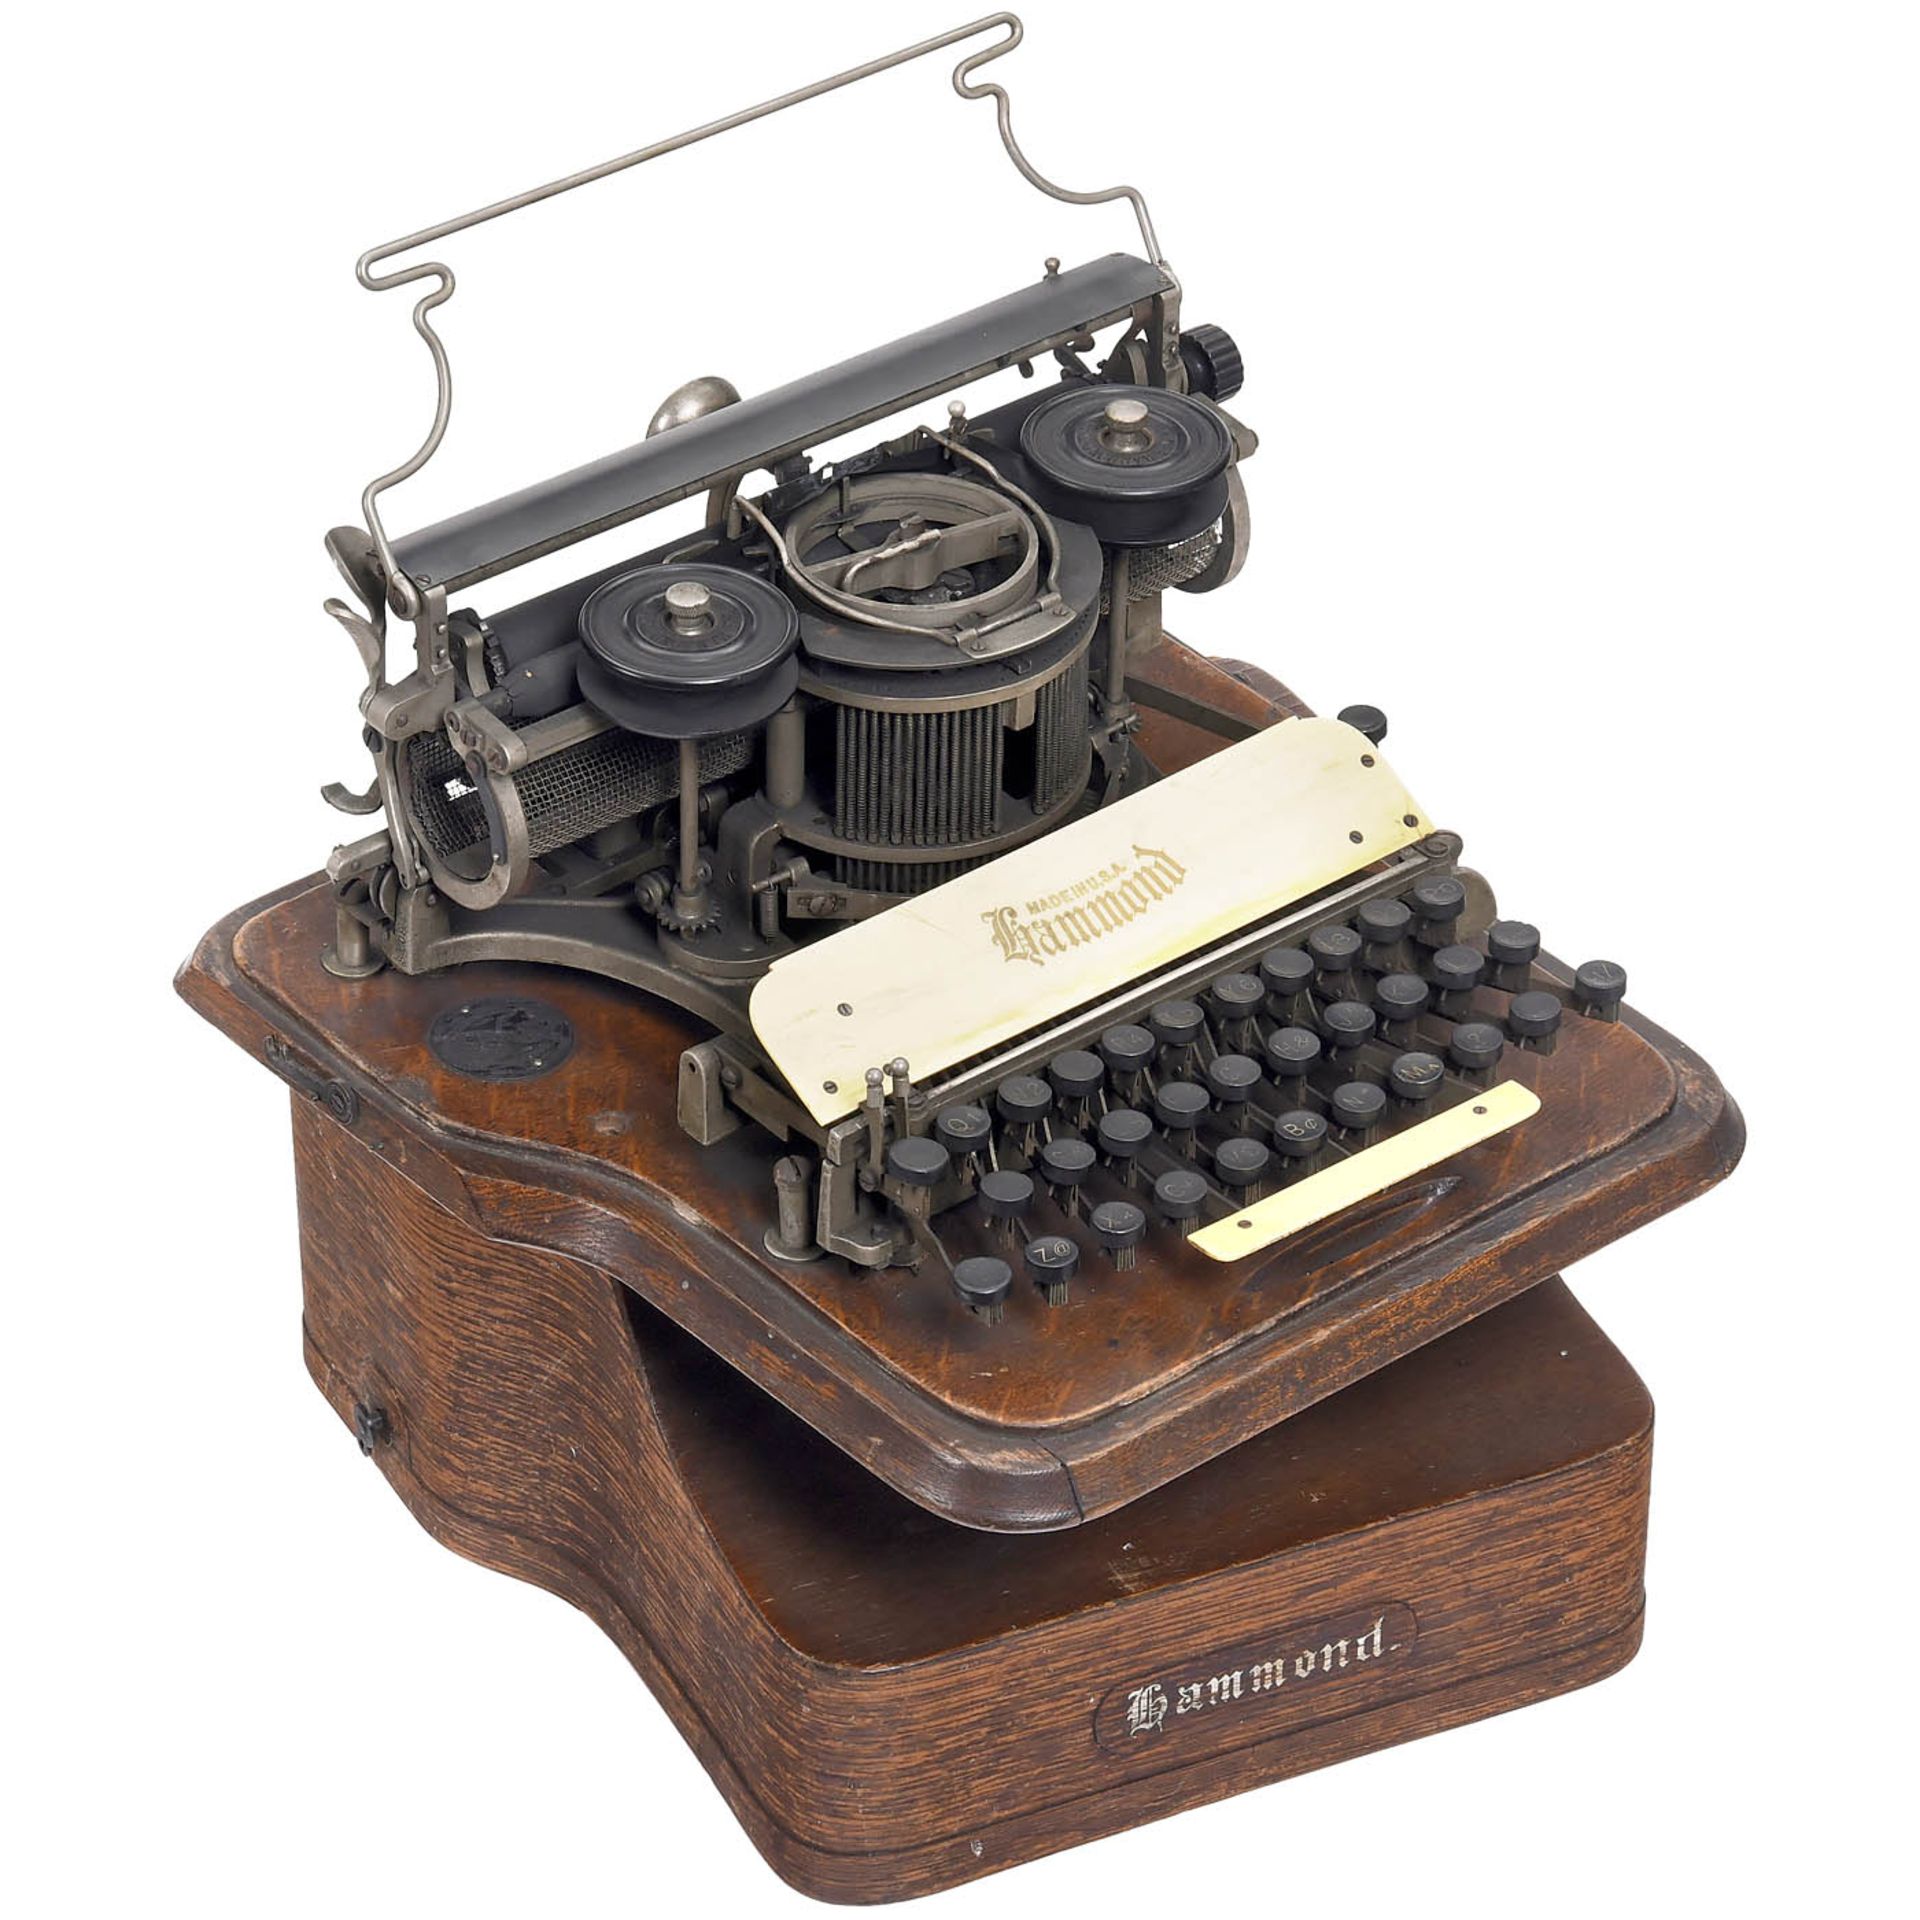 Hammond No. 1B Ideal and "Hammond No. 12 Universal" Typewriters - Image 3 of 3